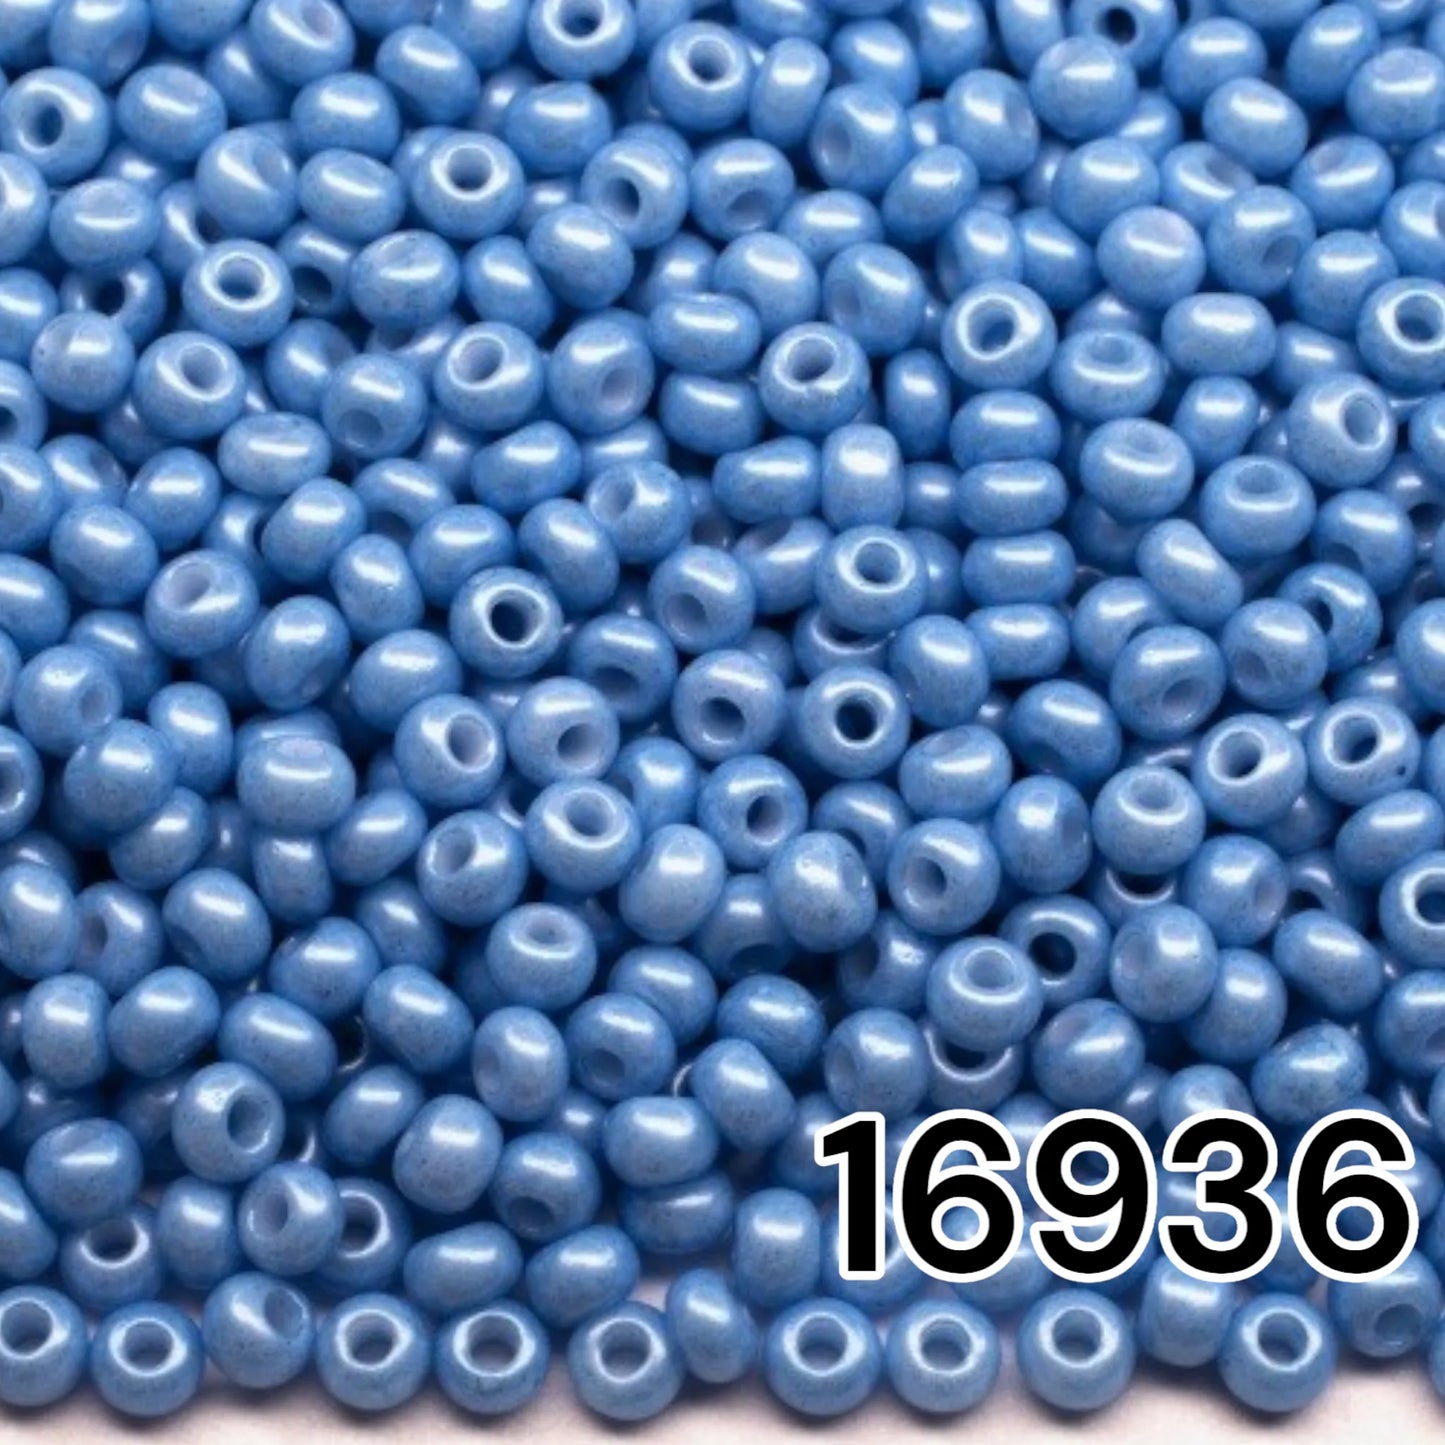 16936 Czech seed beads PRECIOSA round 10/0 blue. Chalk - Terra Pearl.